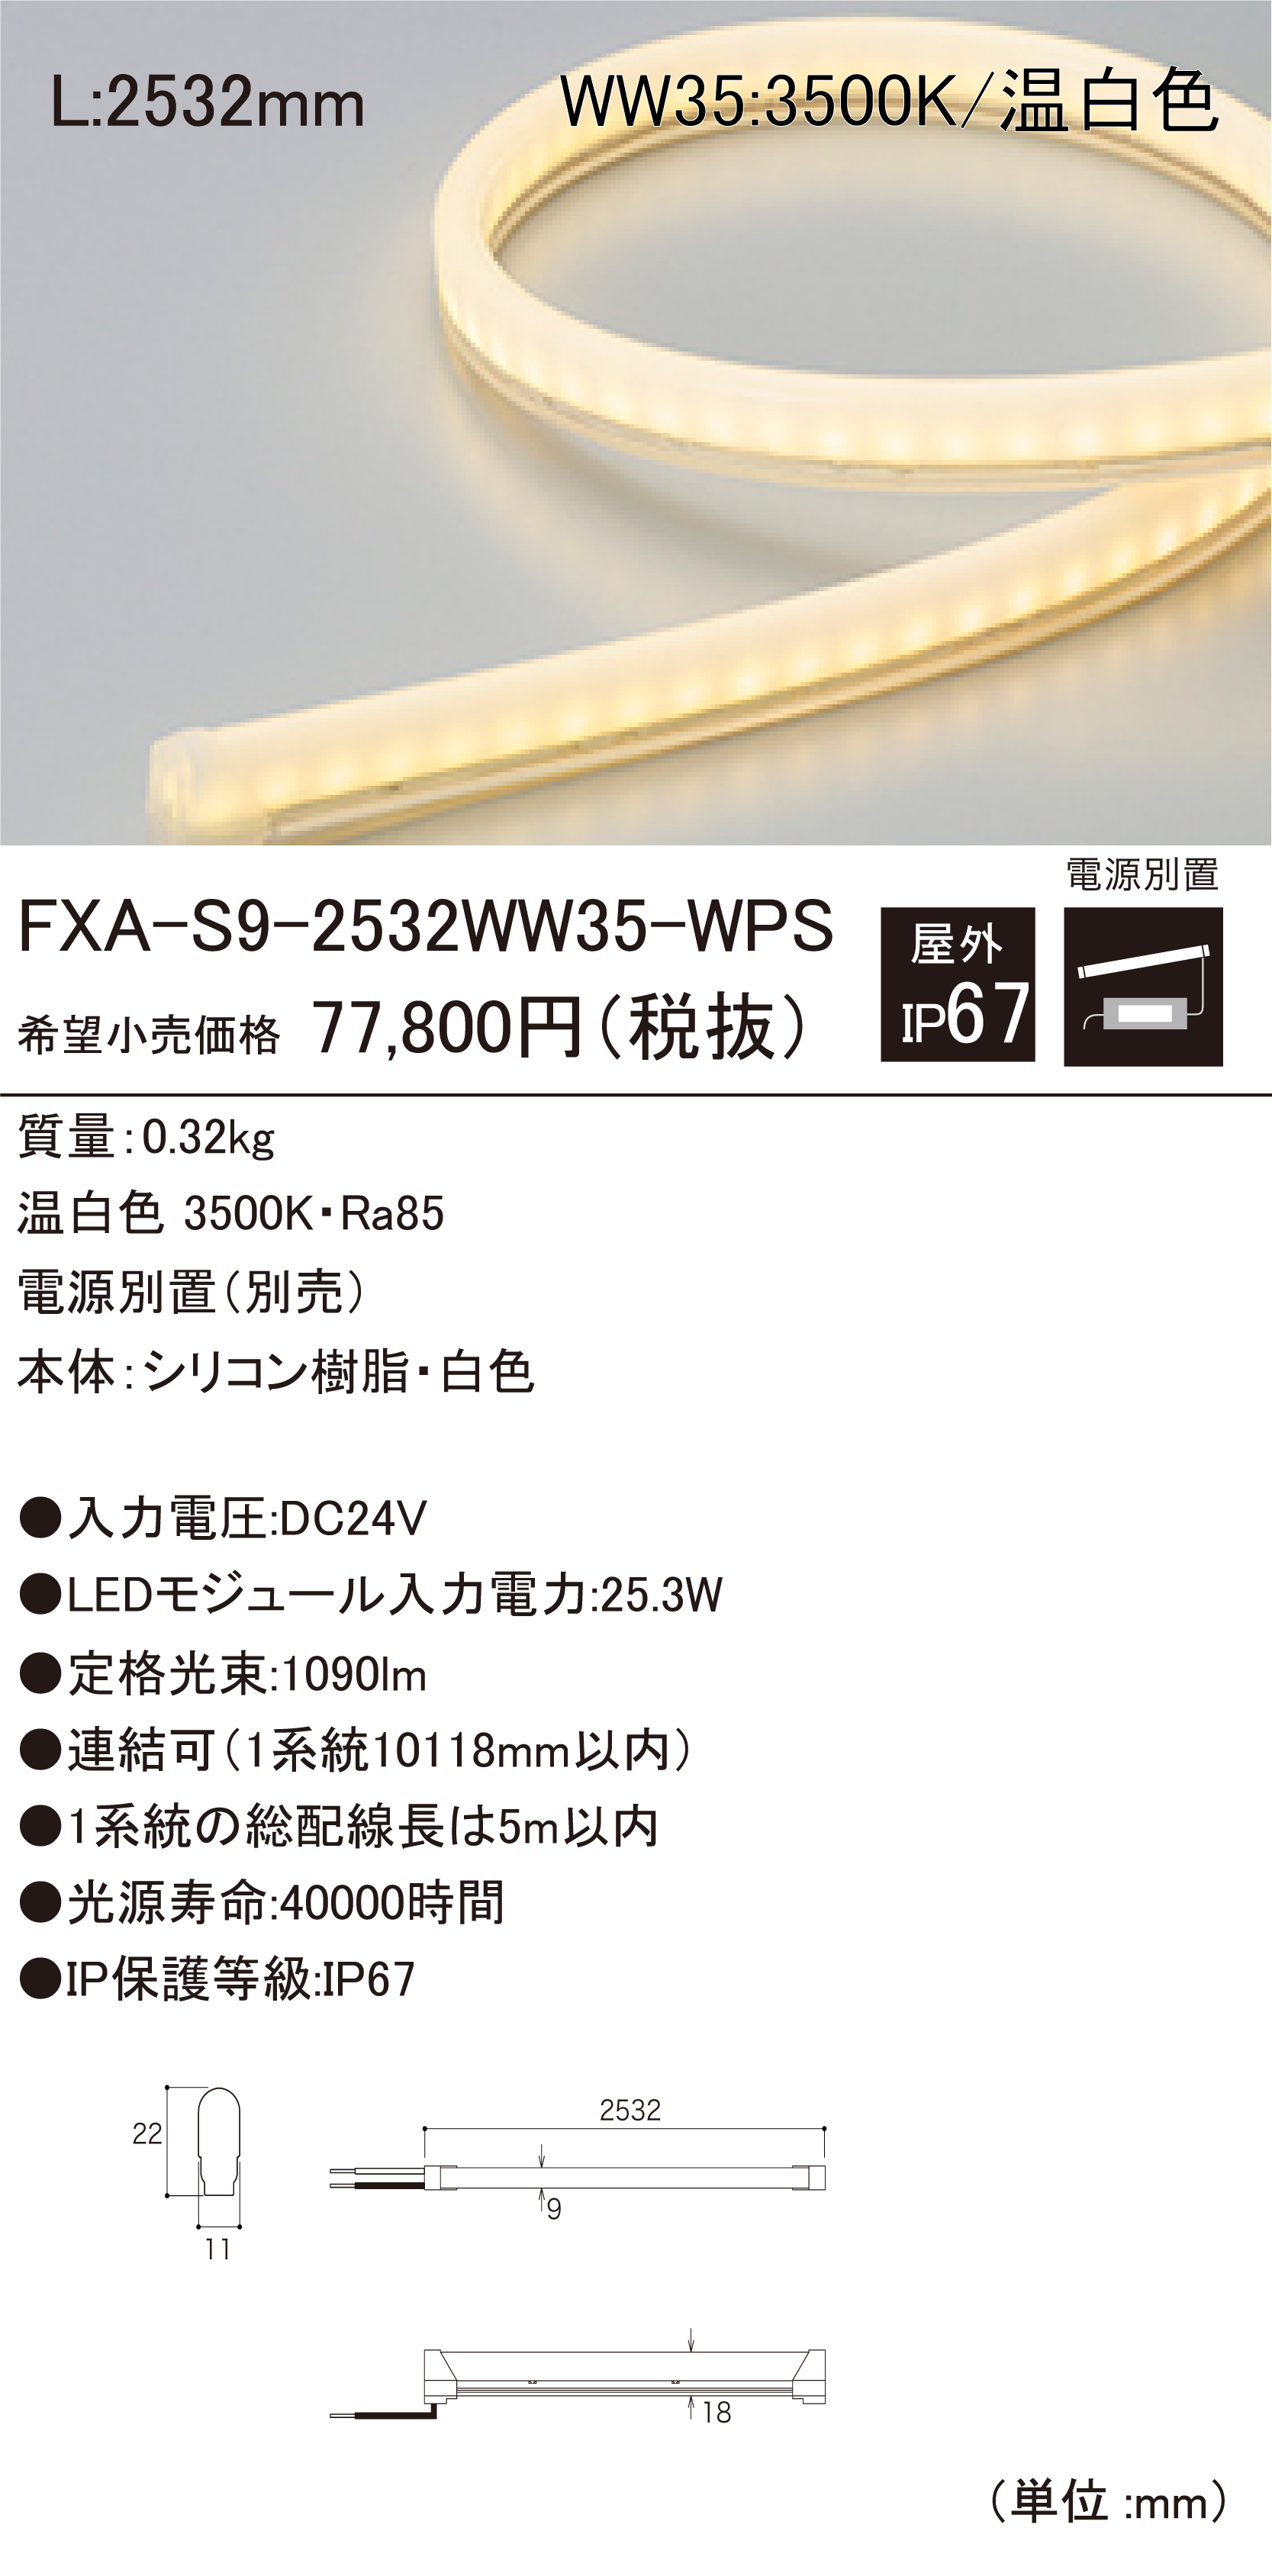 FXA-S9-WPS 屋外用LEDモジュール ダウンロード | DNライティング株式会社